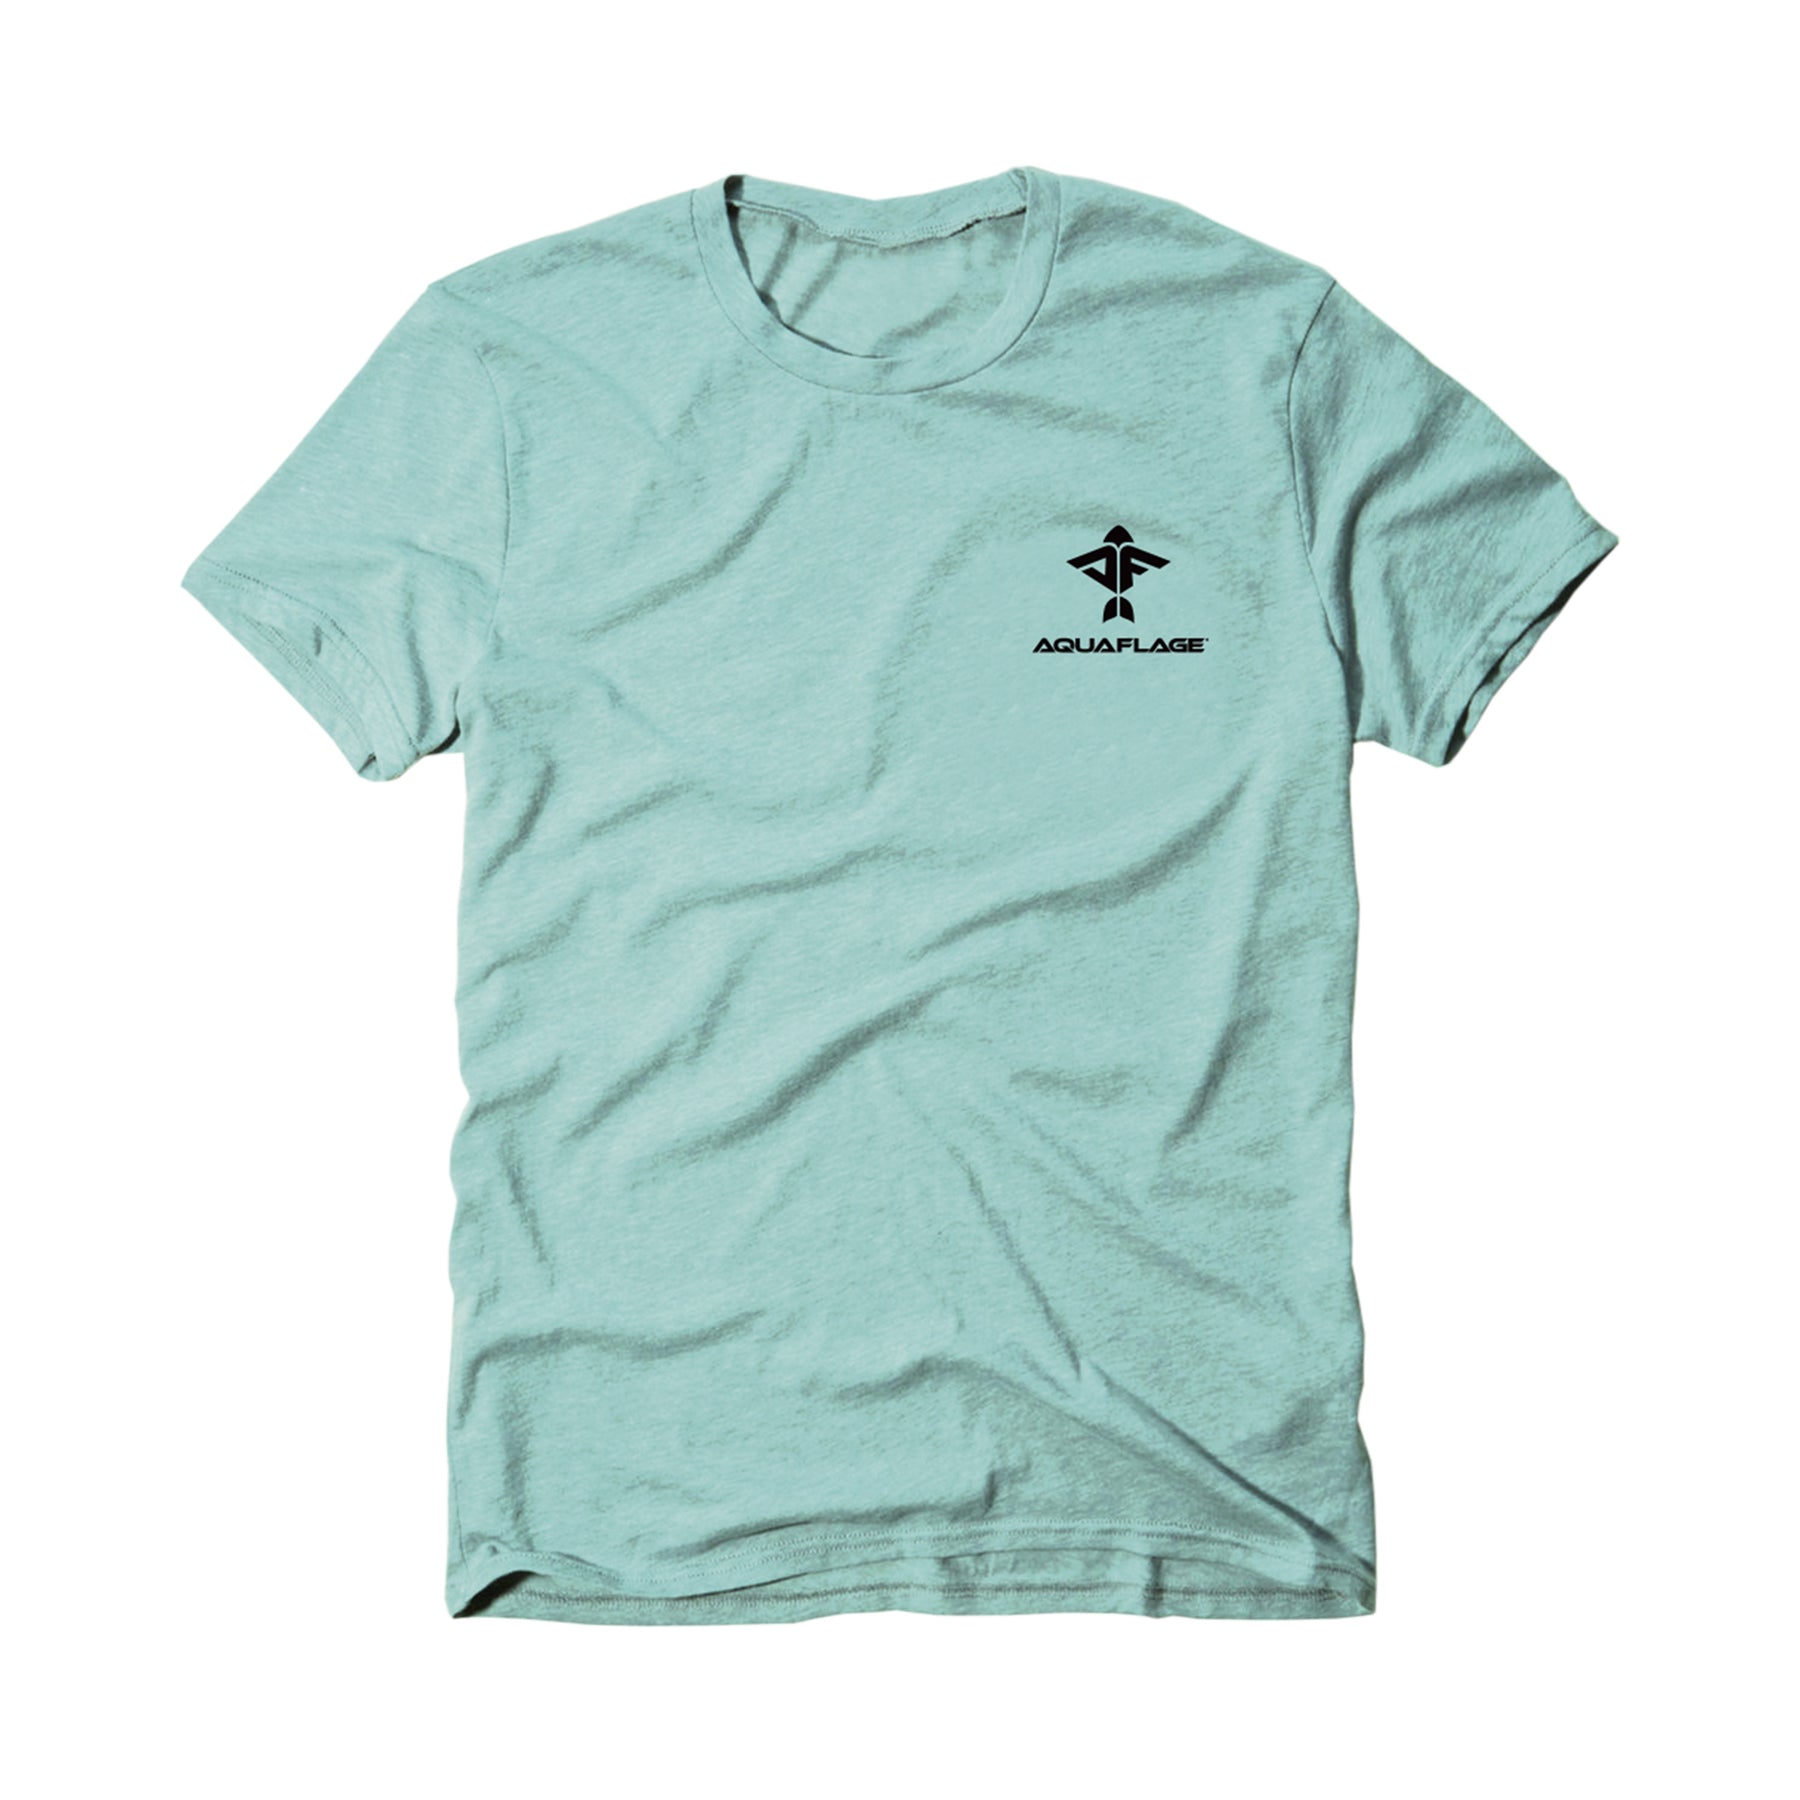 Sleeve Boating Men\'s Aquaflage Short – Mint T-Shirt -